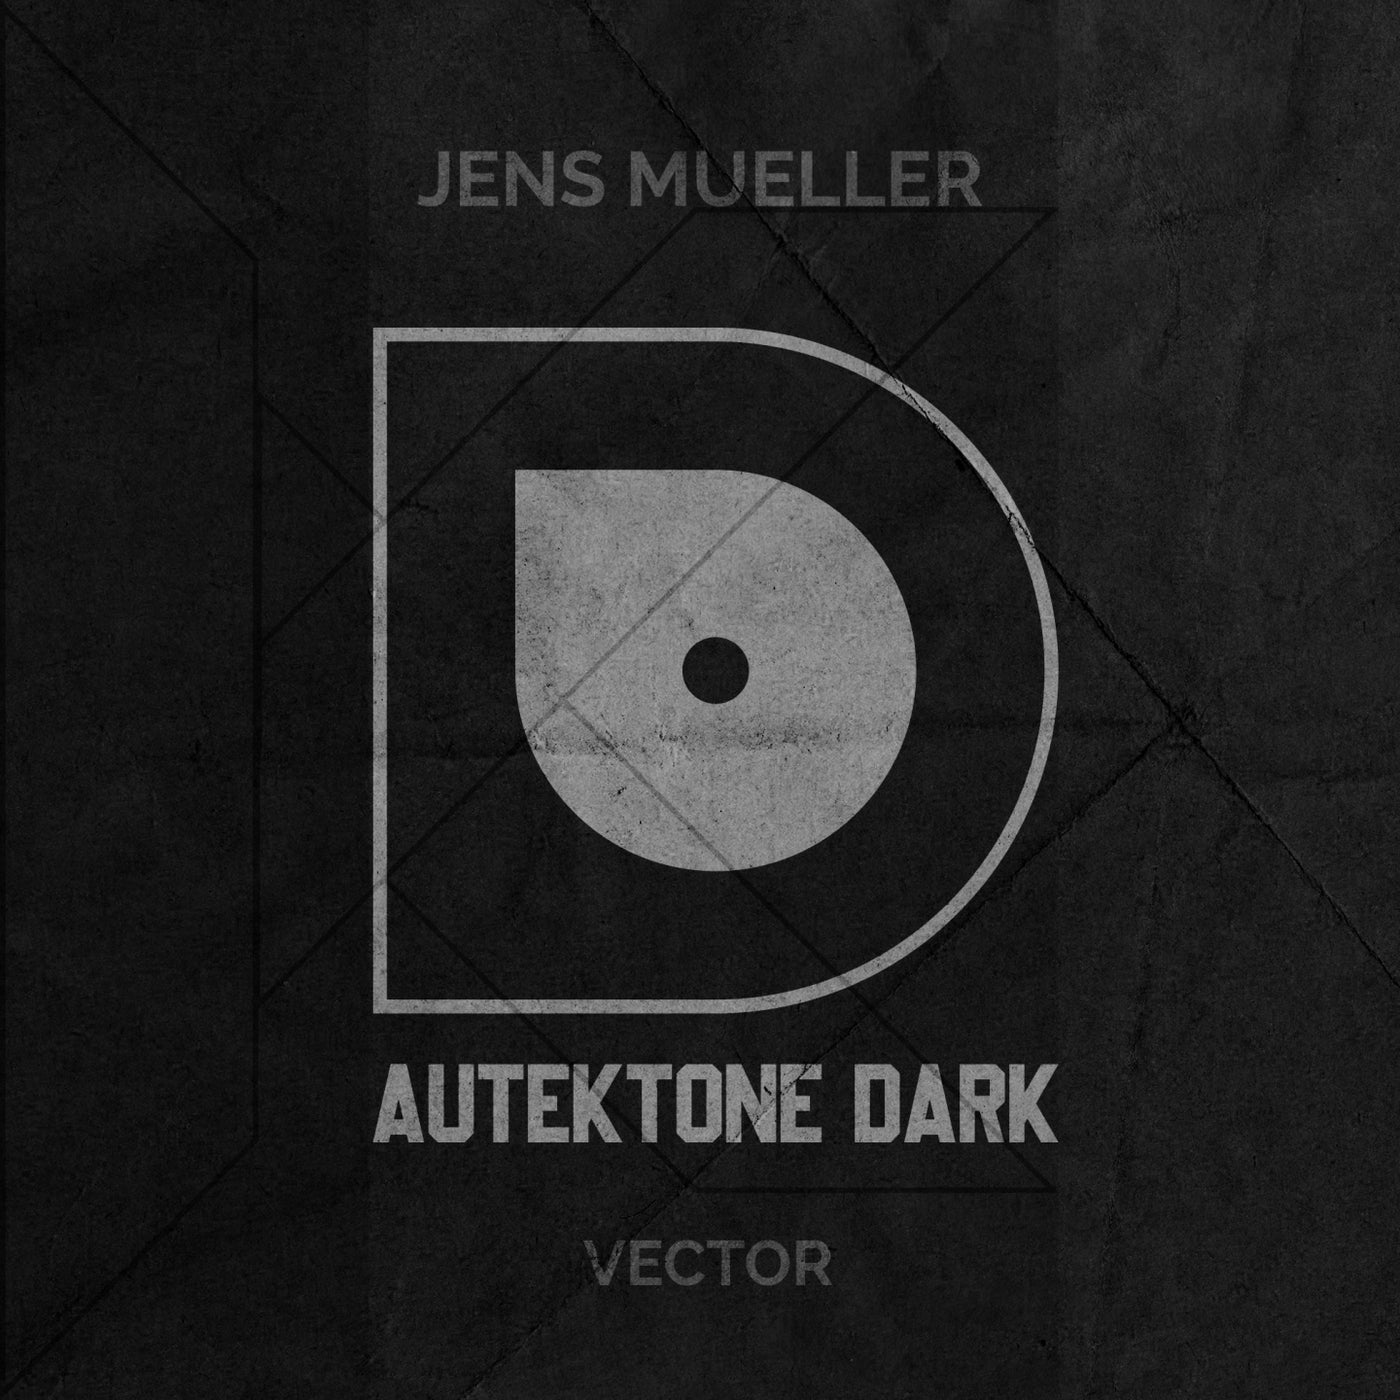 Jens Mueller - Vector [AUTEKTONE DARK]